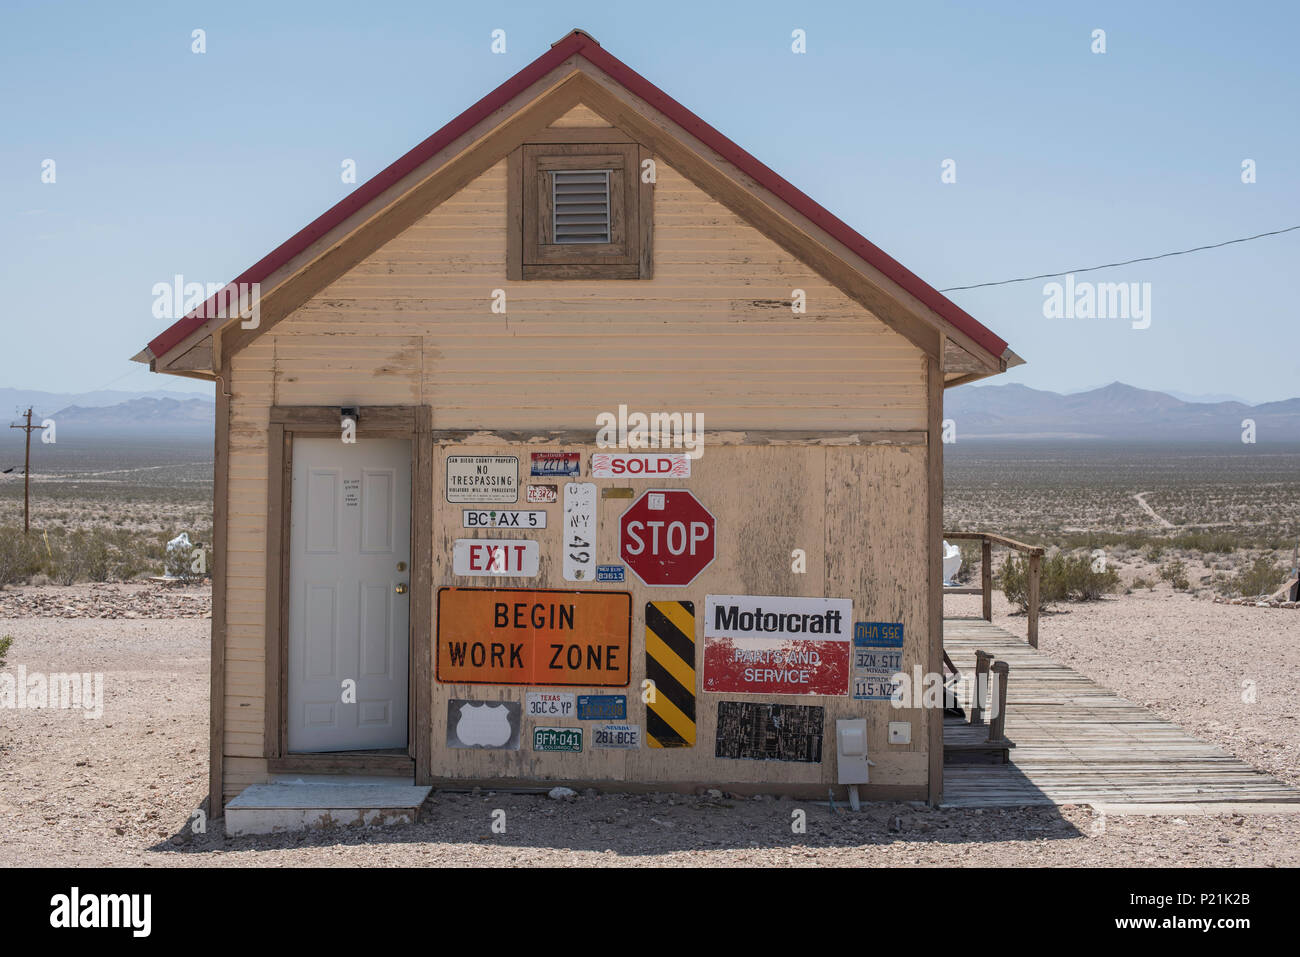 Goldwell open air museum di riolite storiche miniere d'oro di Ghost Town, nei pressi di Beatty, Nevada, STATI UNITI D'AMERICA Foto Stock